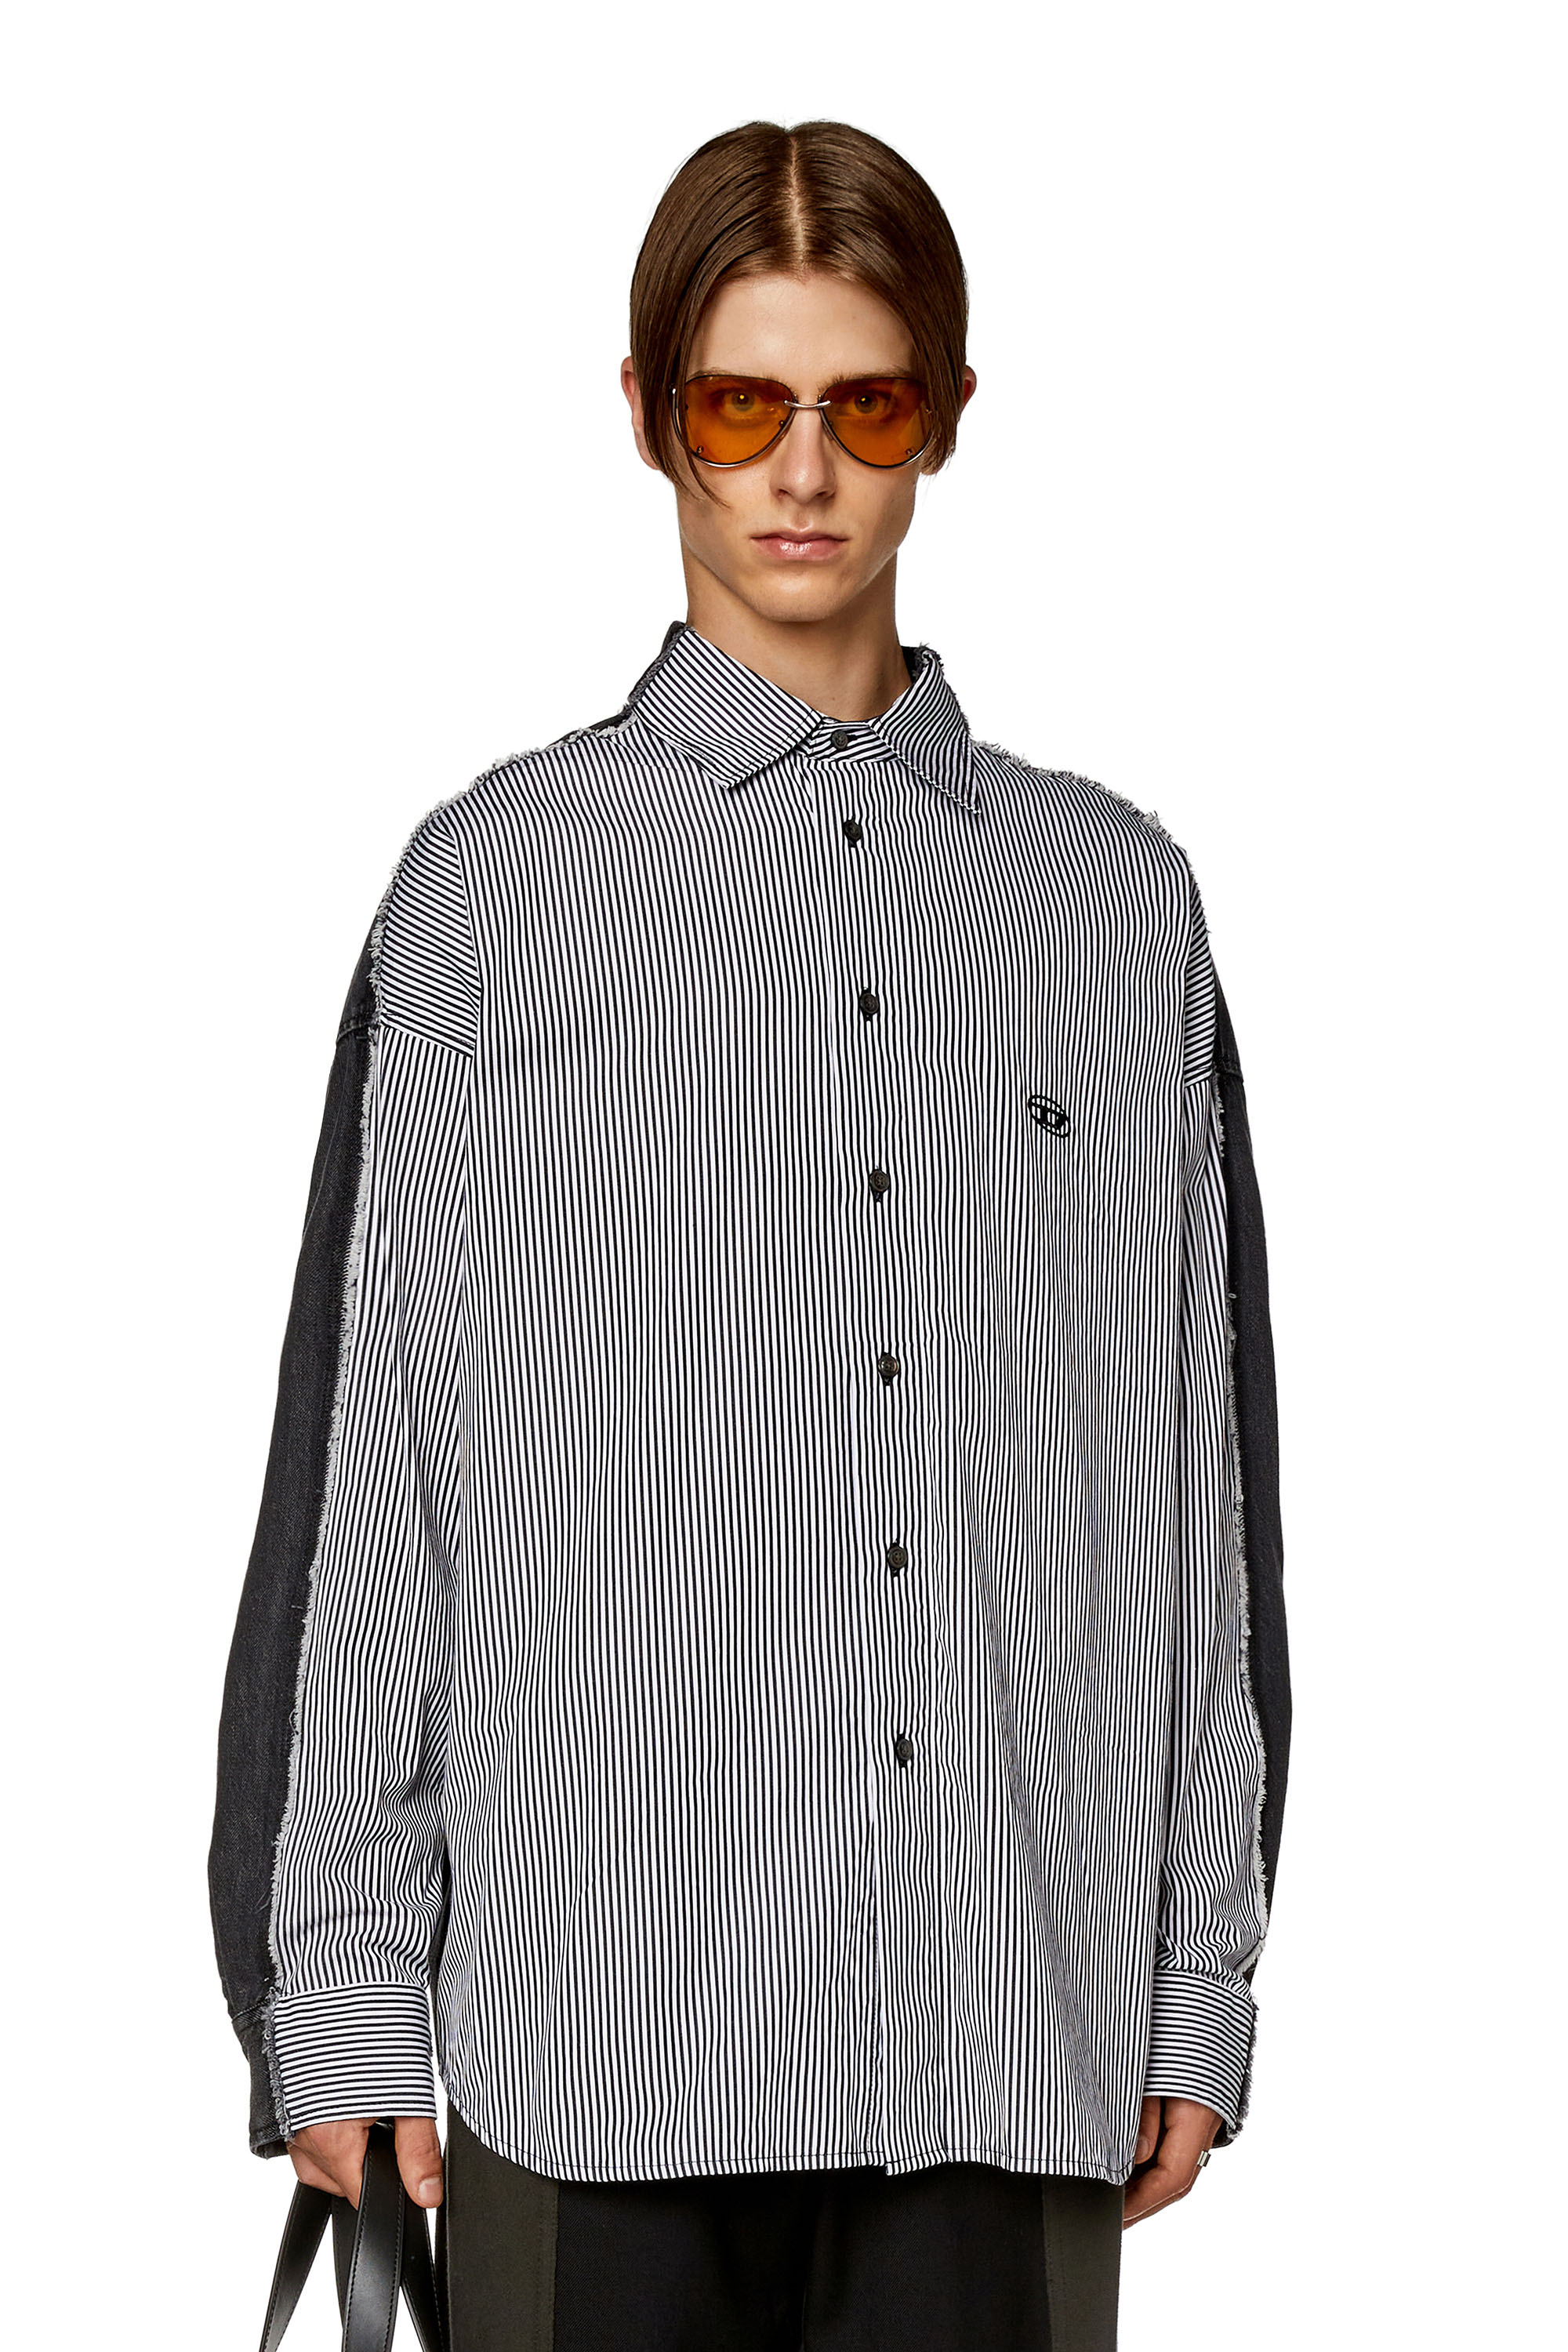 Diesel - S-WARH-STRIPE, Man Striped shirt with denim back in Multicolor - Image 1